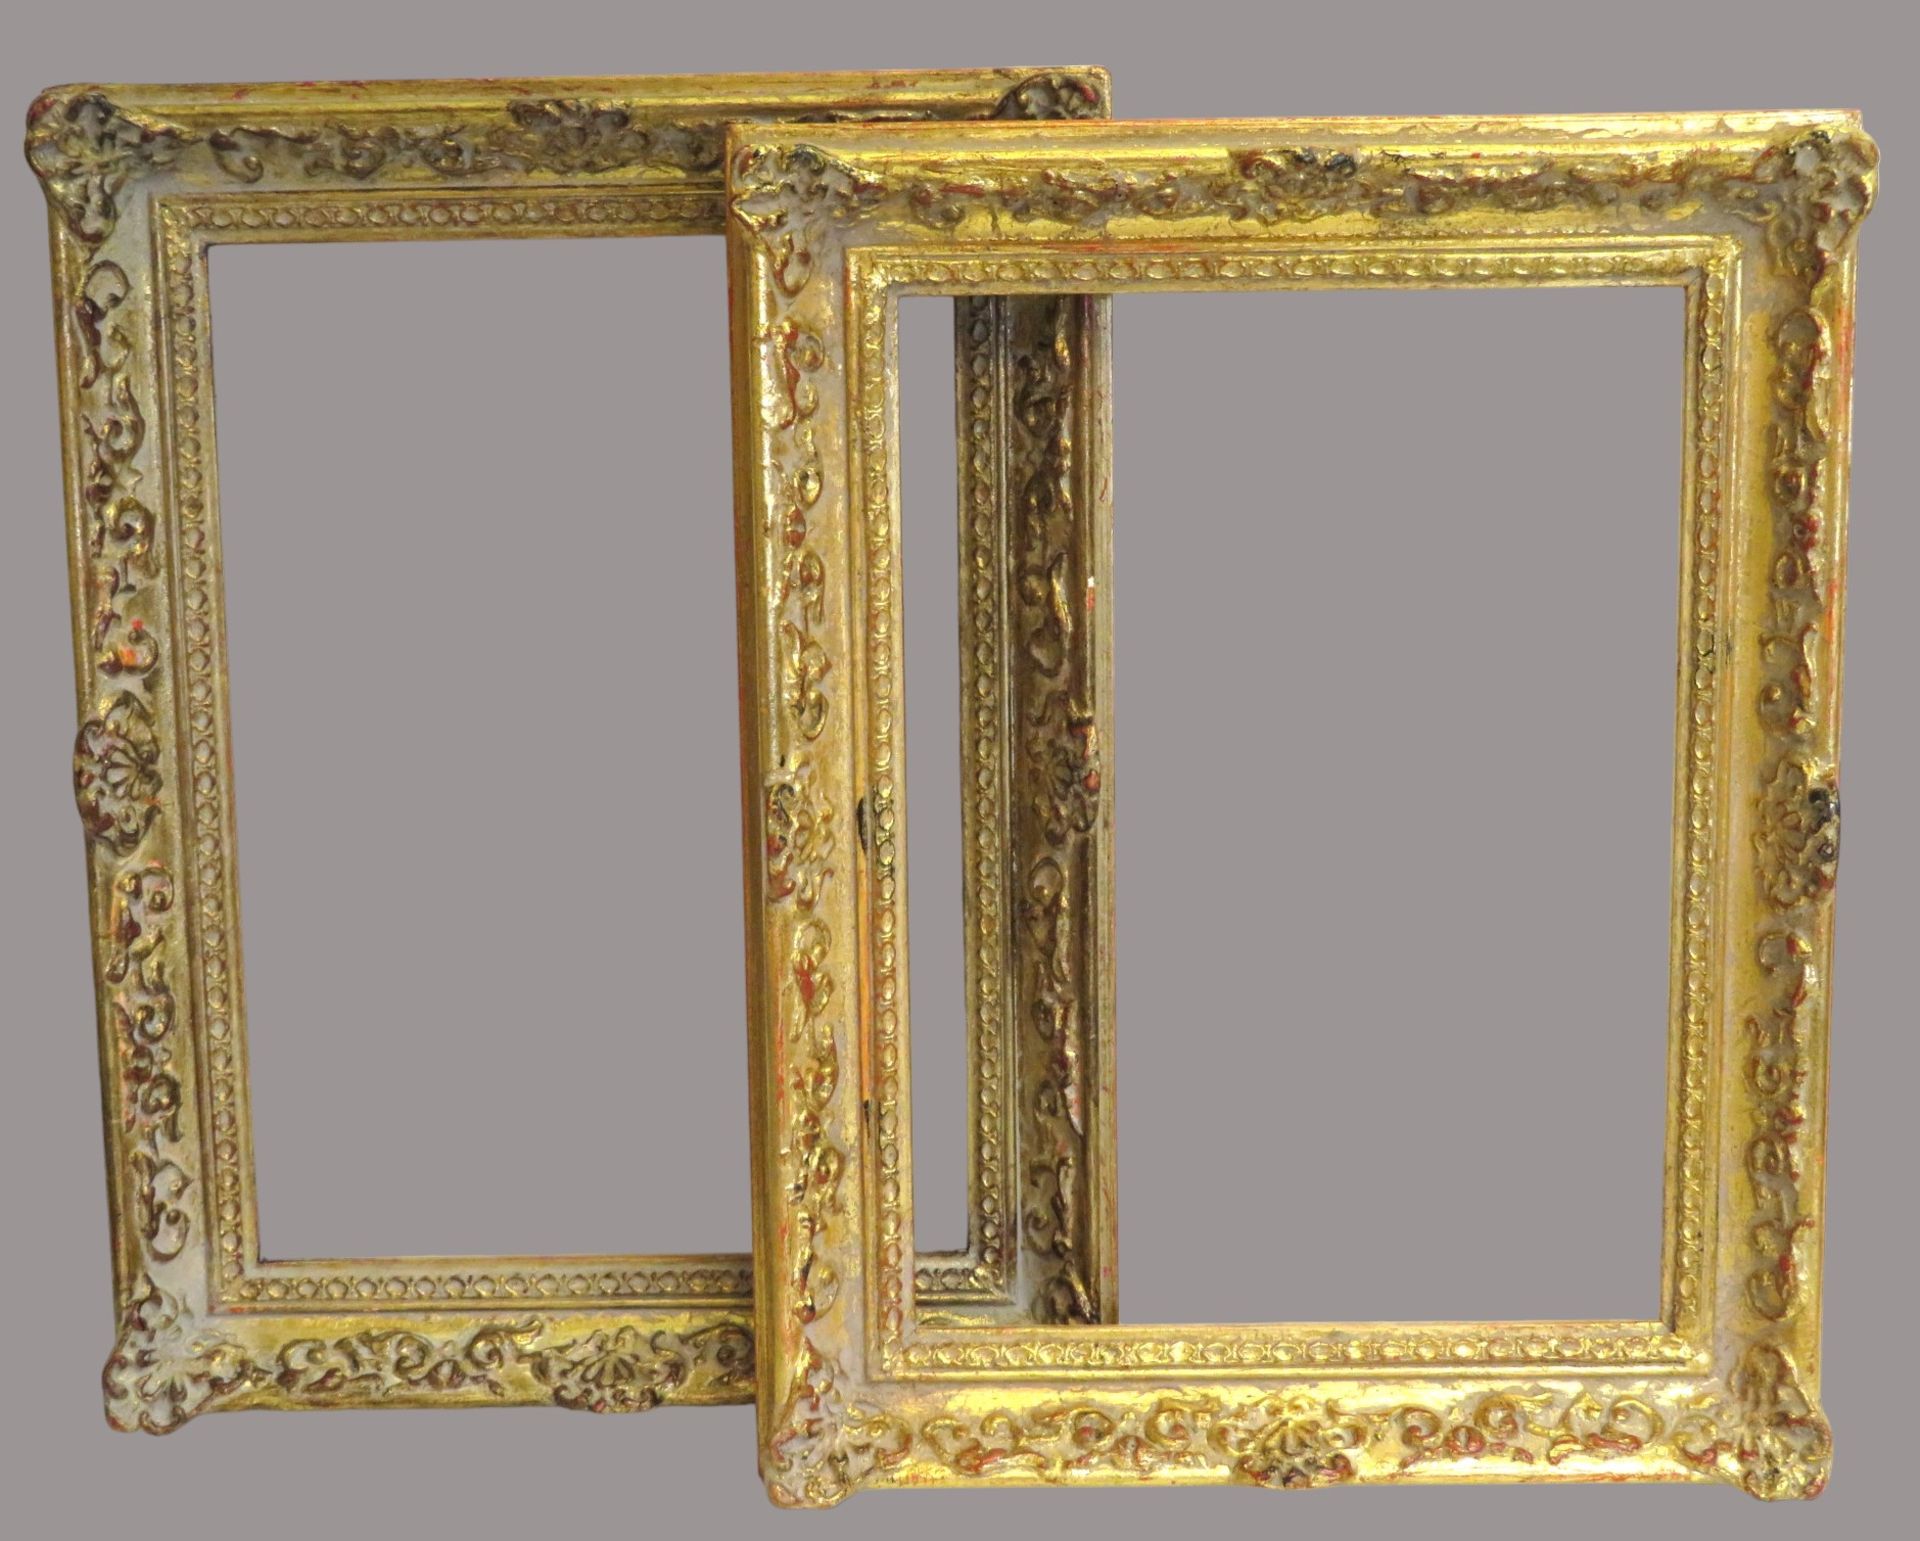 2 Barockstilrahmen, Stuck vergoldet, Innenmaß 28,2 x 21 cm, Außenmaß 34,5 x 27,5 cm.